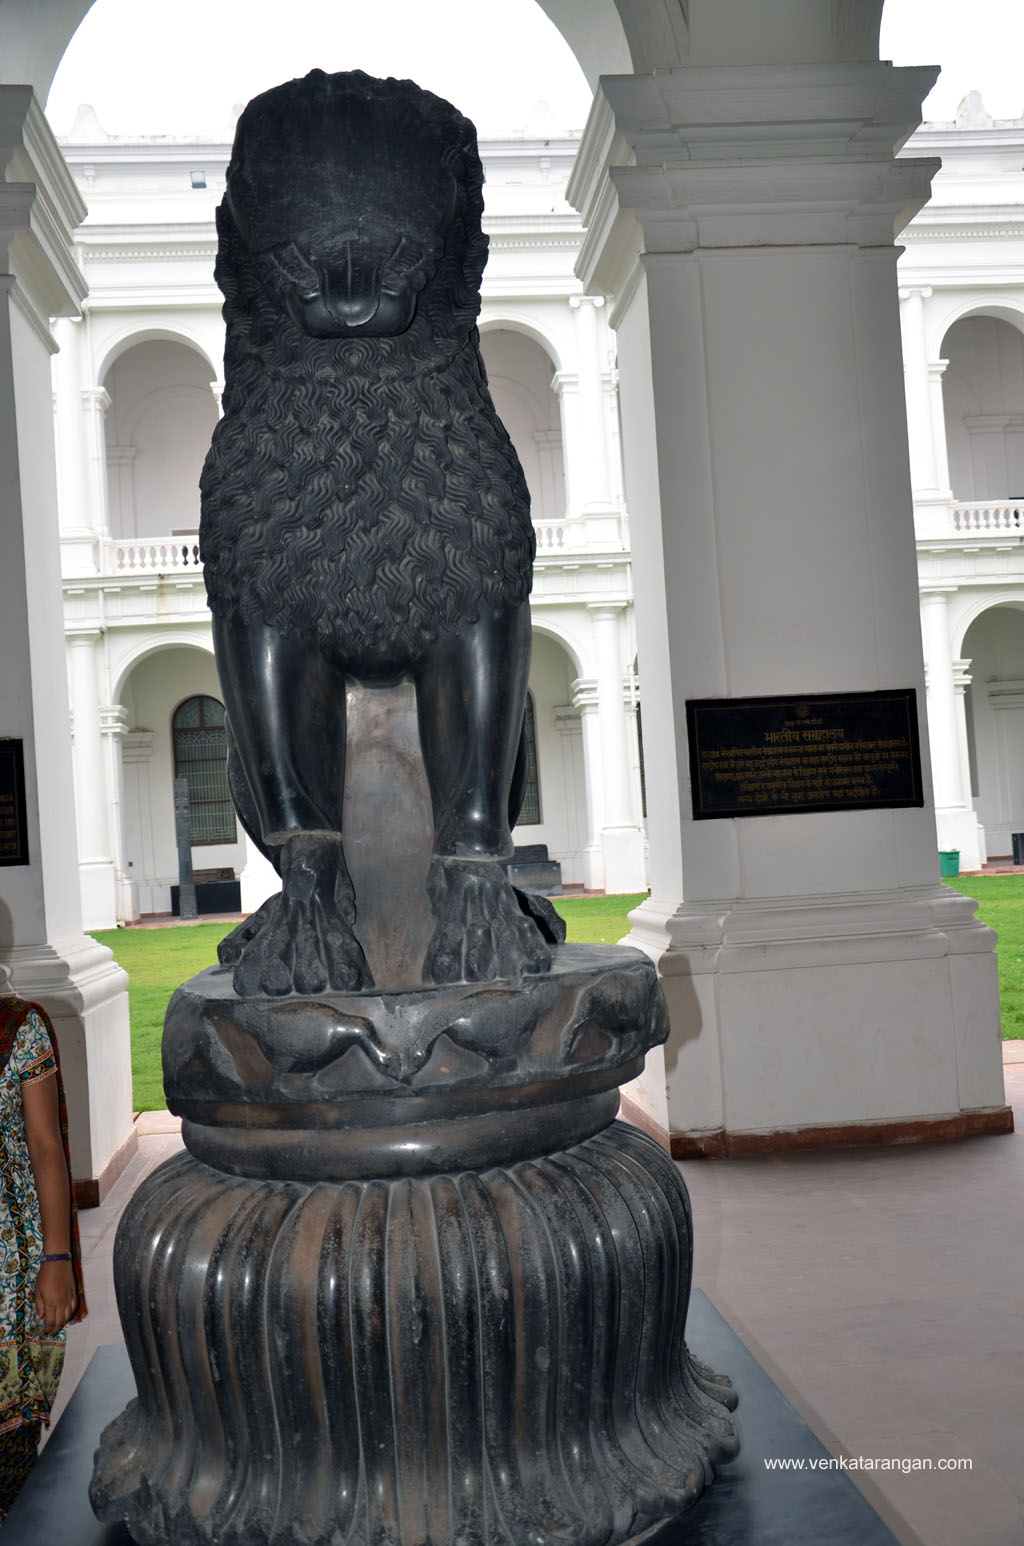 Indian National Emblem-The Lion Capital of Ashoka